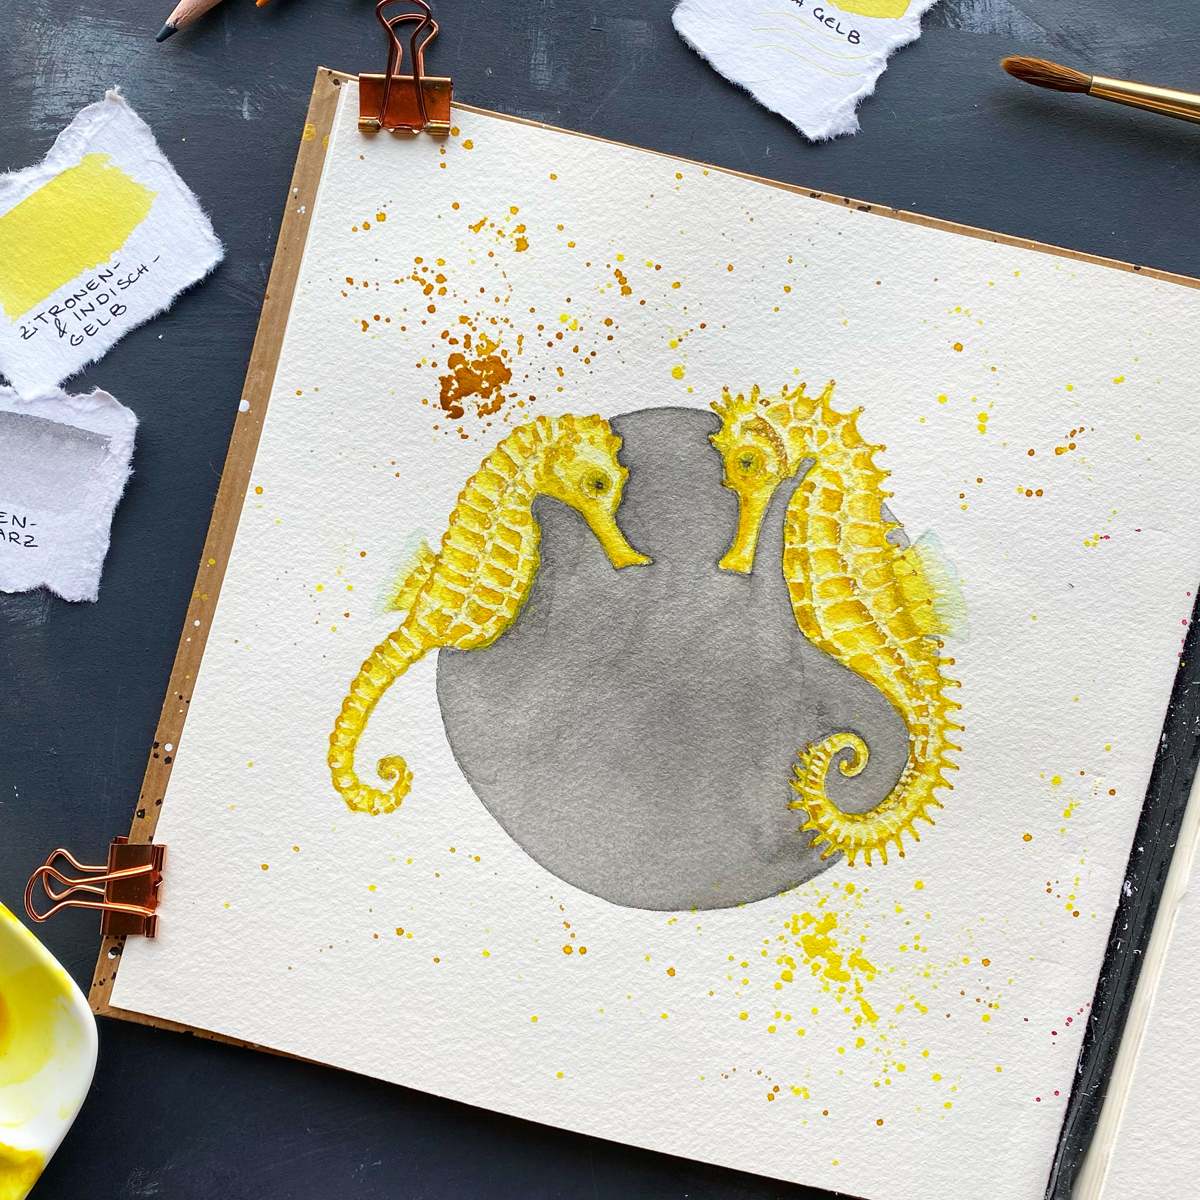 Seepferdchen in den Pantonefarben "Illuminating Yellow" und "Ultimative Grey"